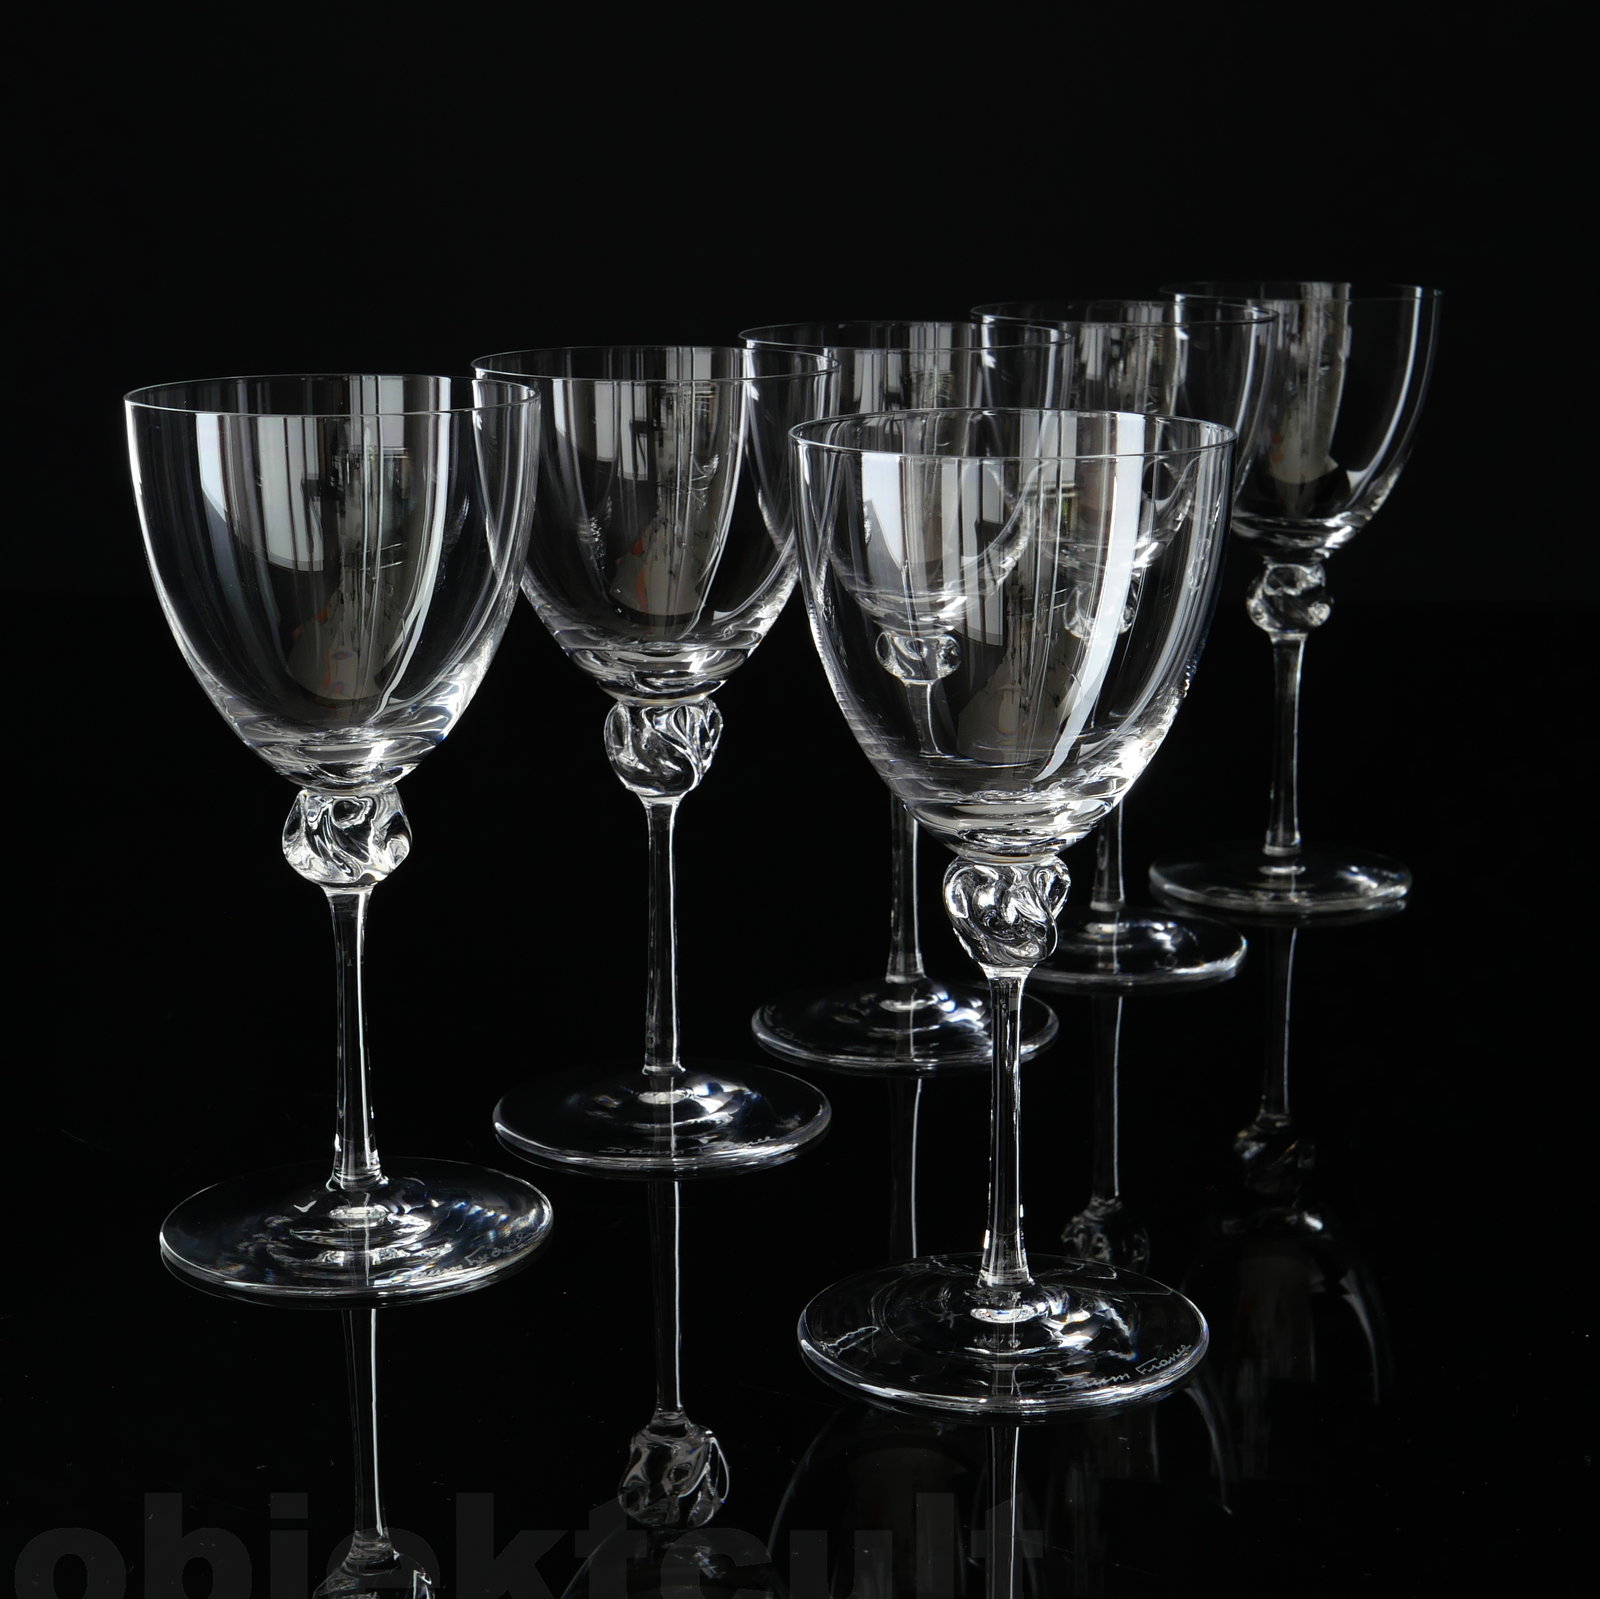 wineglasses, Weingläser, manufacturer: Daum Nancy